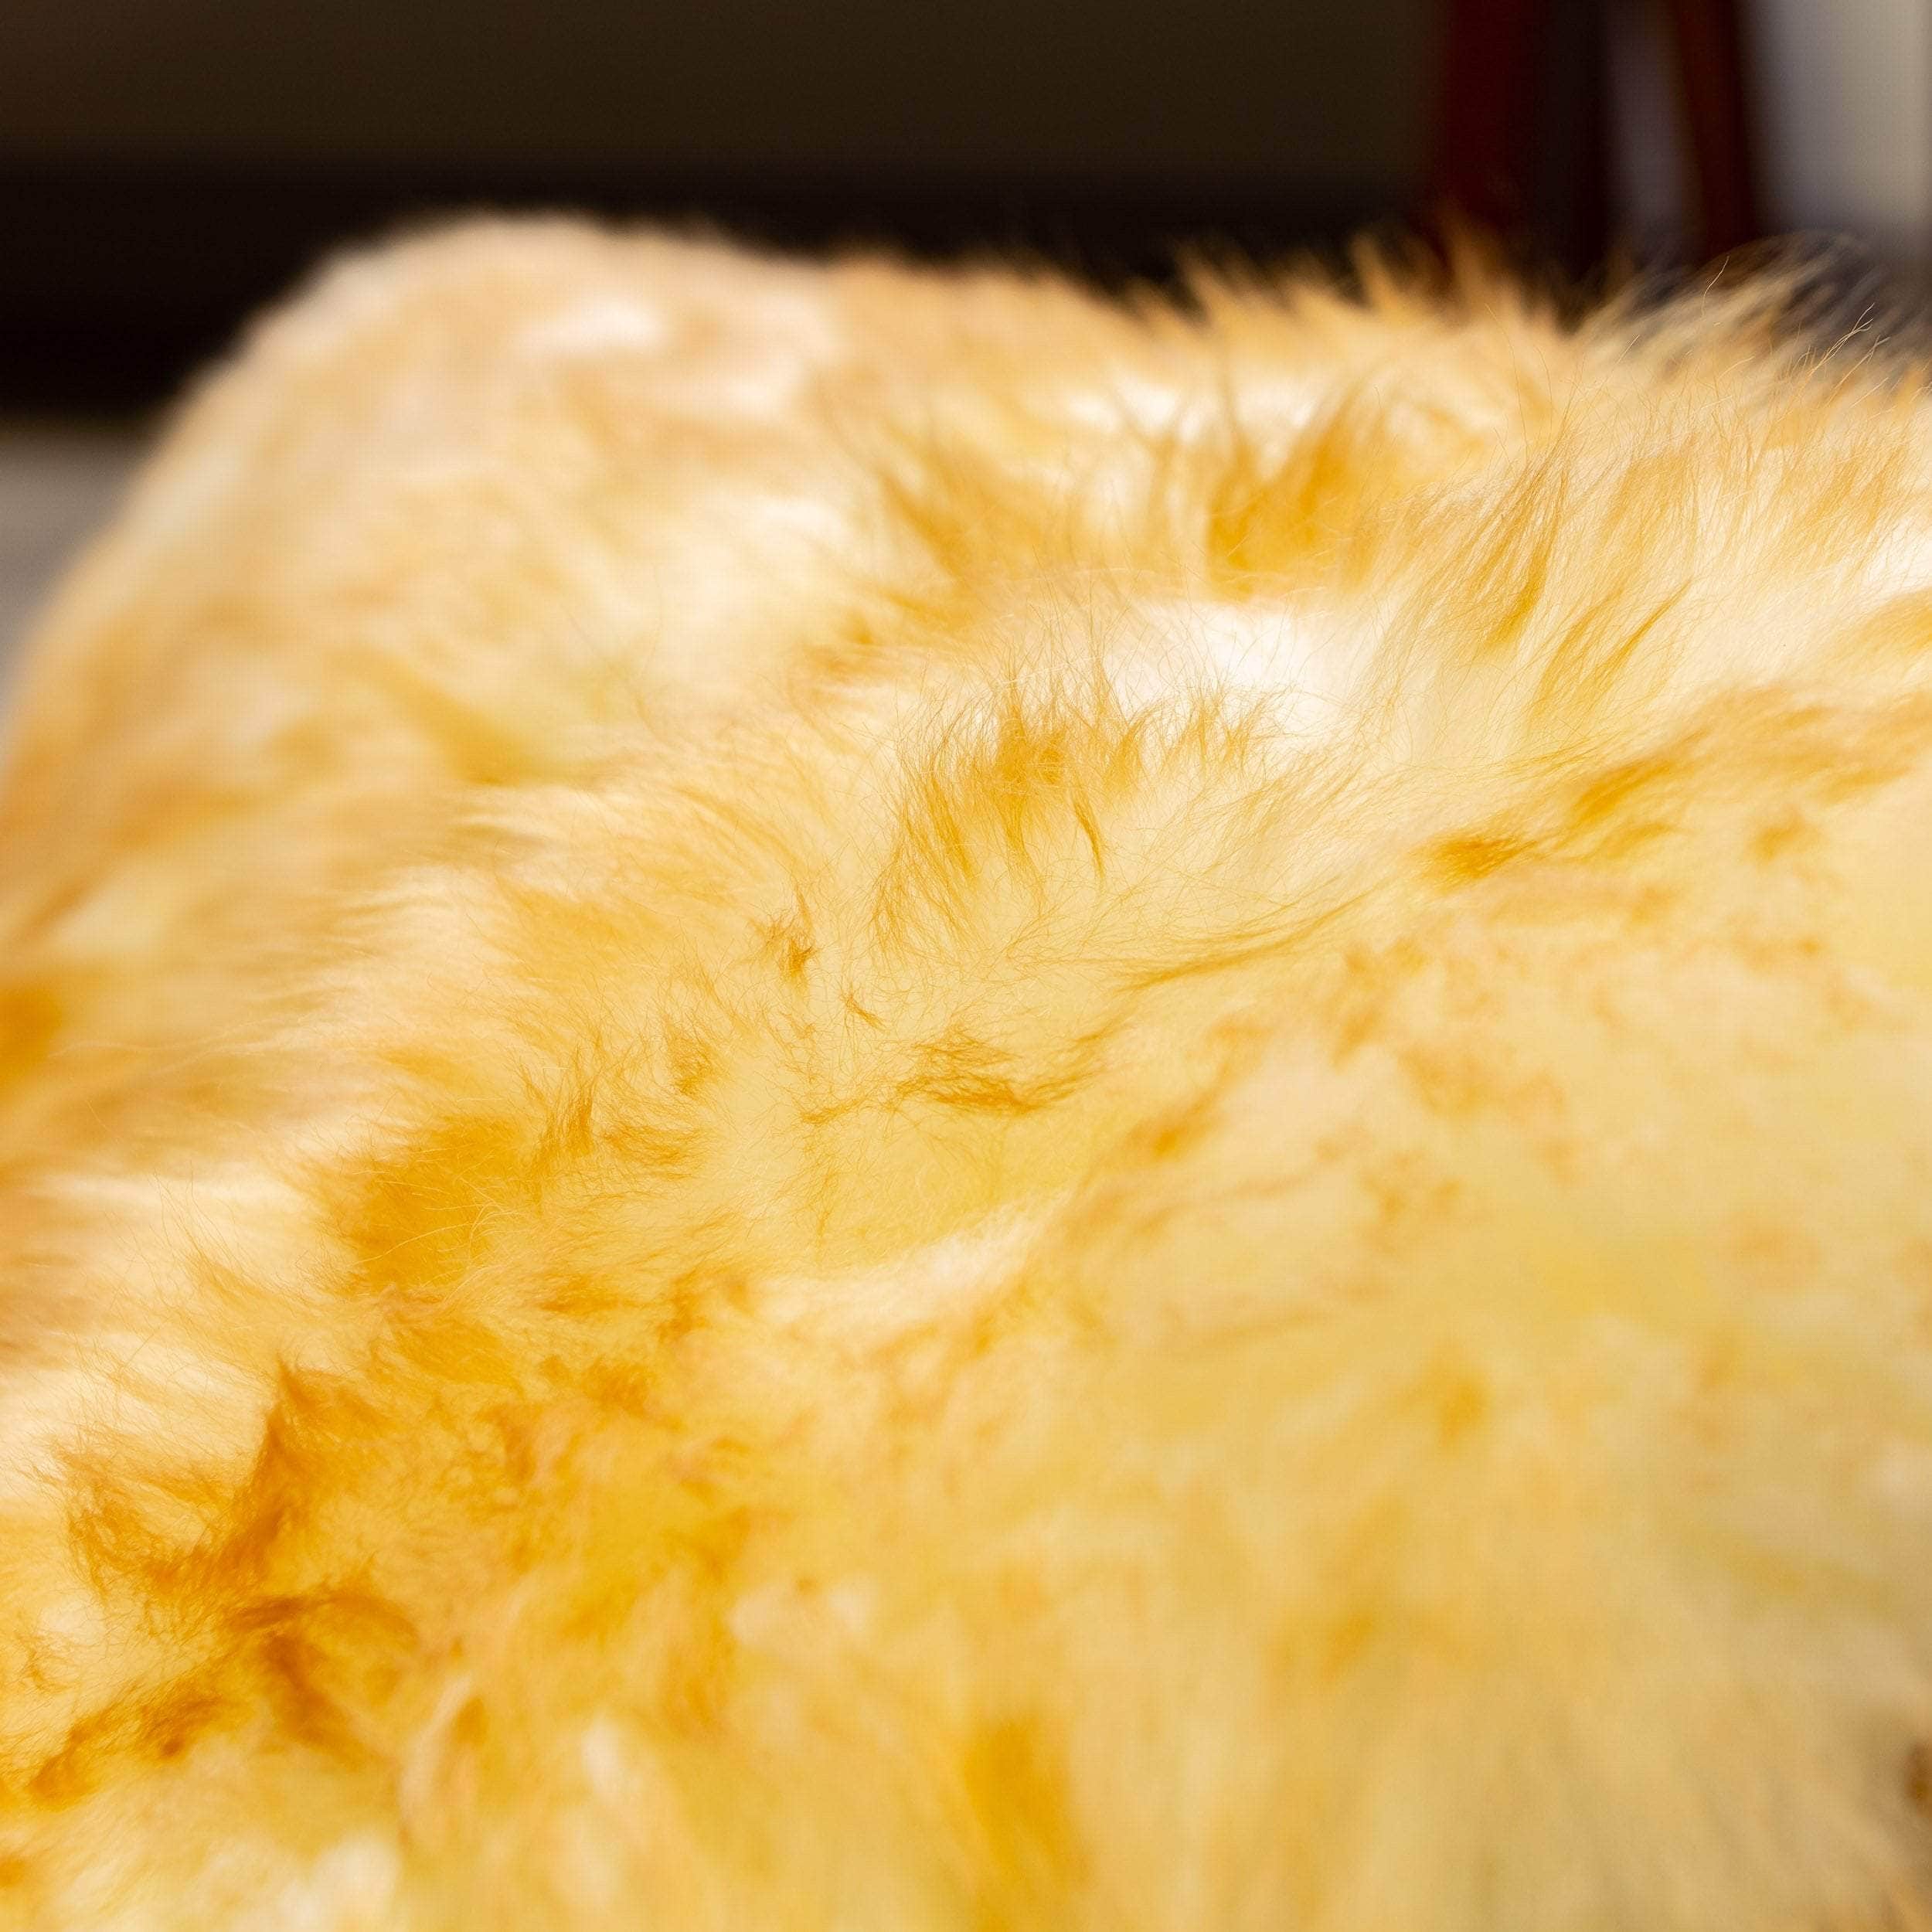 Natural Sheepskin Rug Shearling Fur Pelt #size_2' x 3'